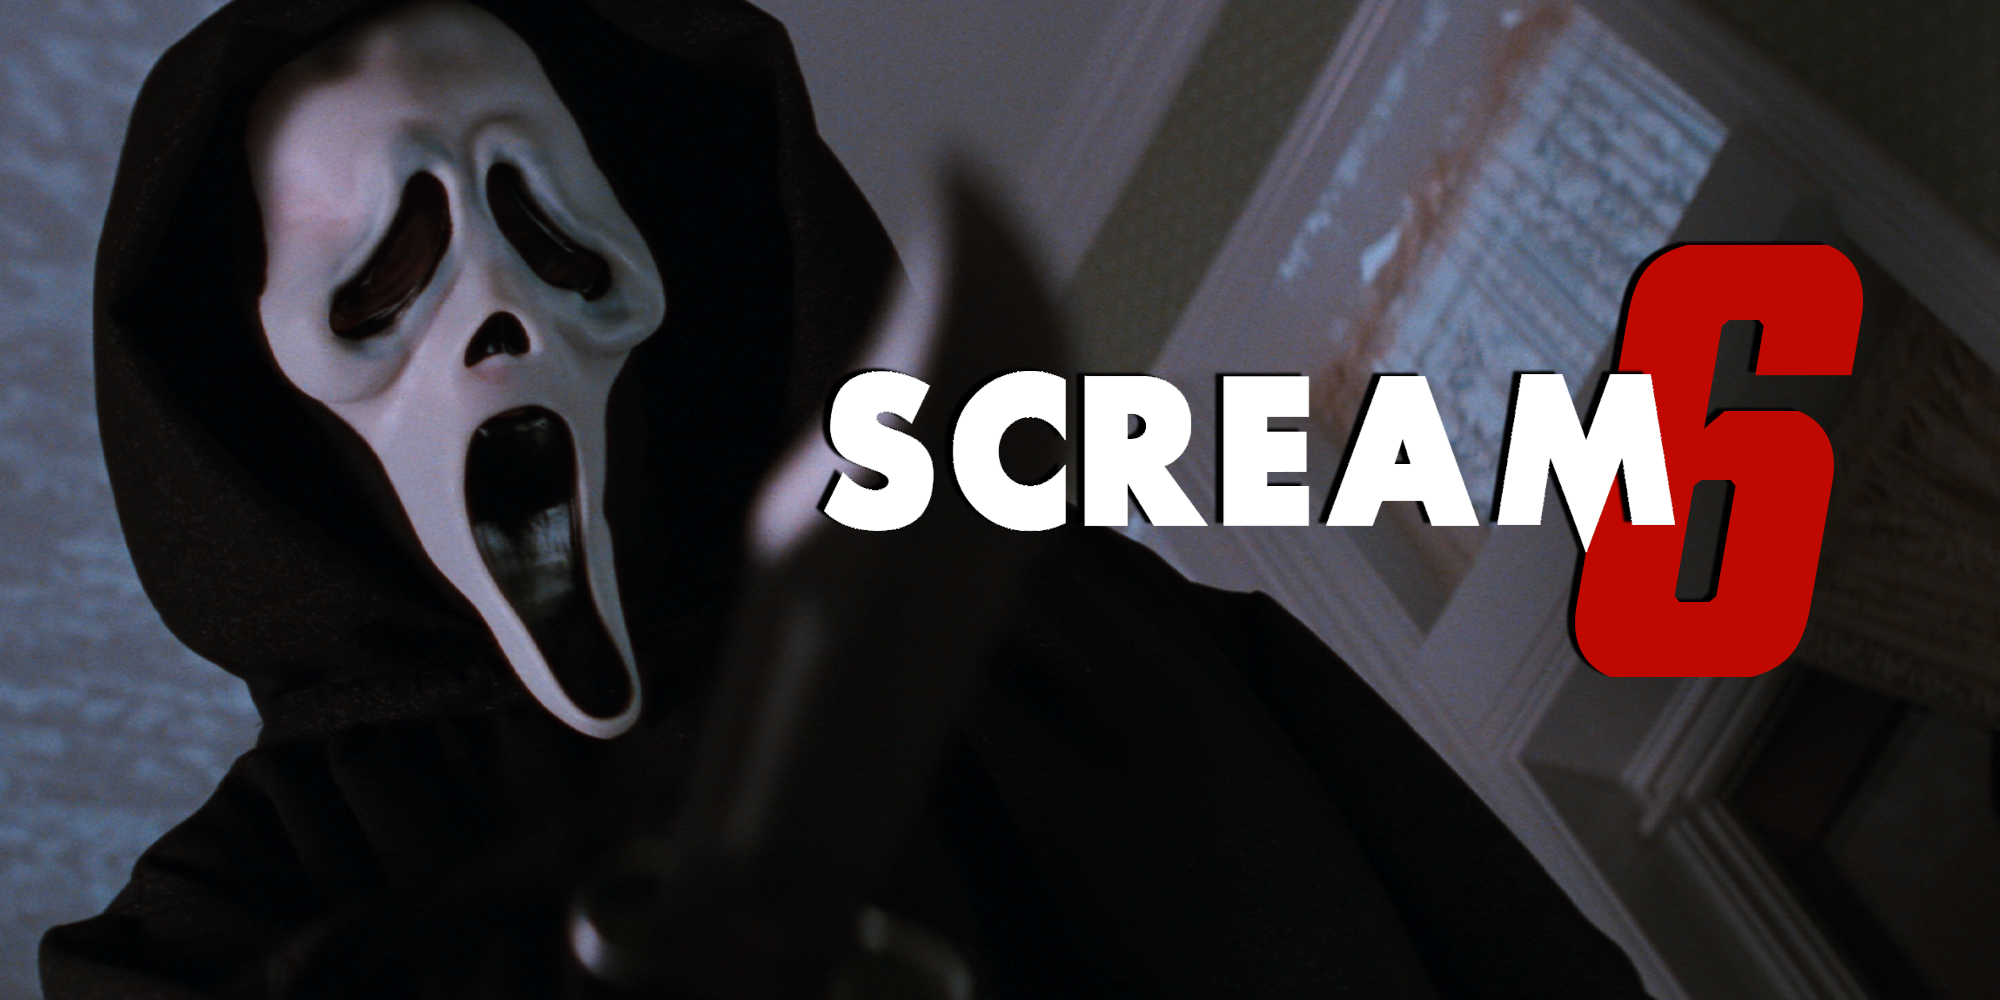 Bringing Scream 6 GhostFace to DBD 